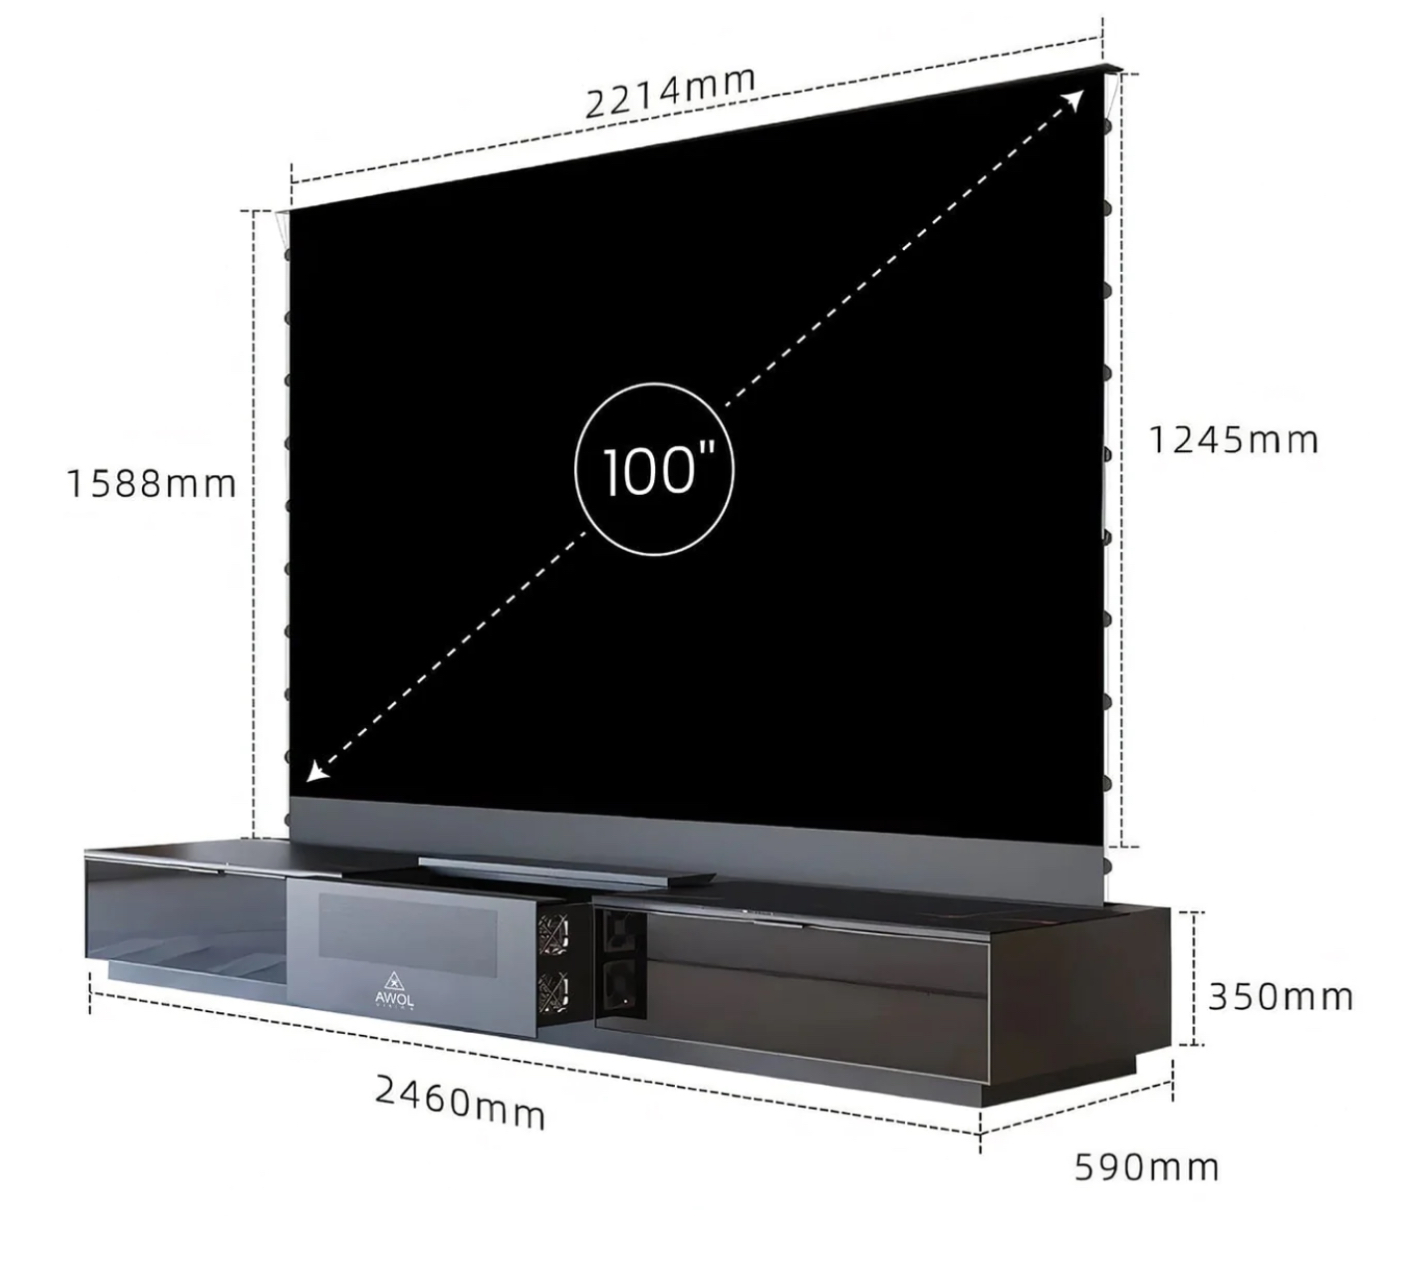 AWOL Vision Vanish Laser TV dimensions